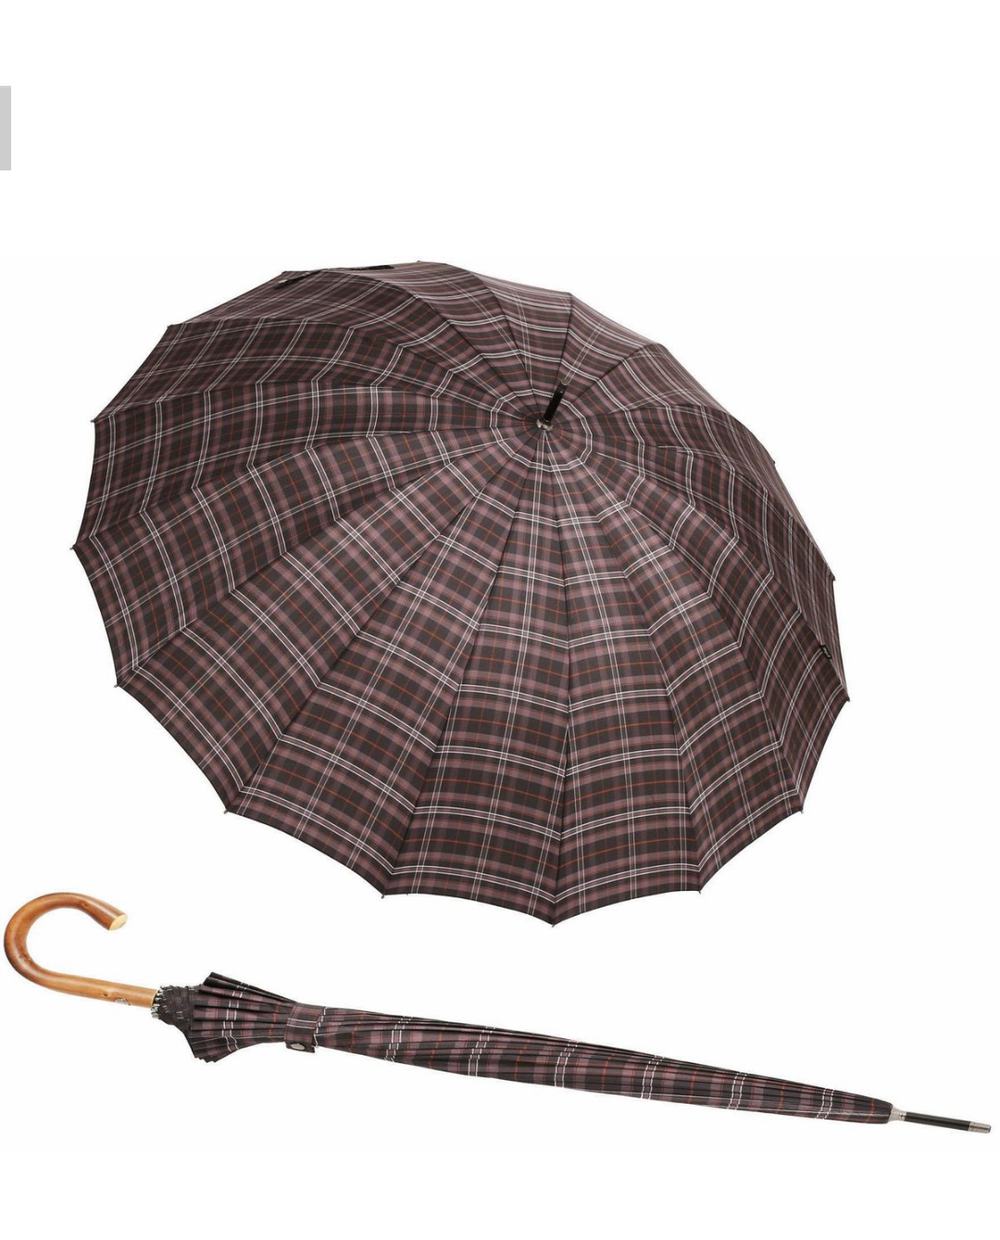 Paraplu extra groot